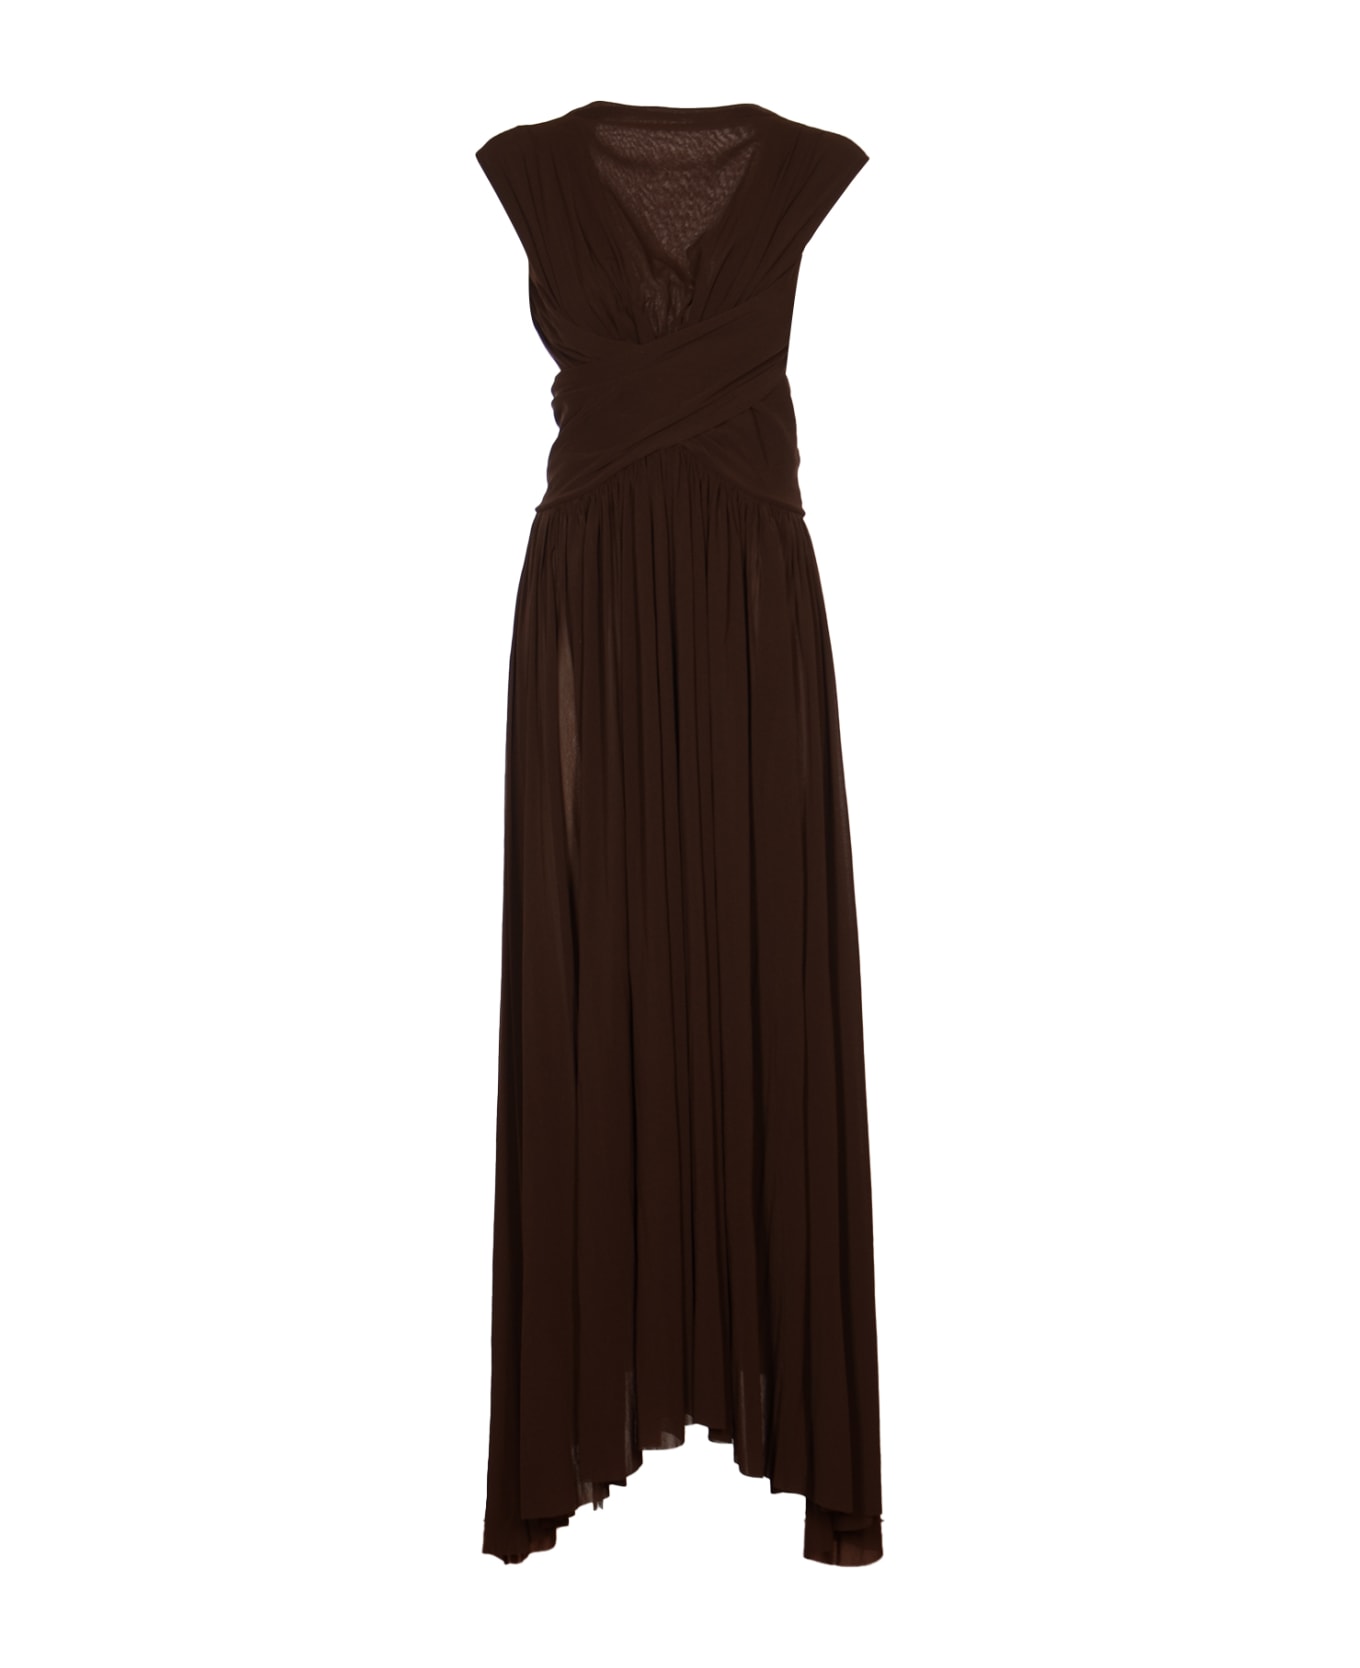 Philosophy di Lorenzo Serafini Wrapped Capped Sleeve Dress - Brown